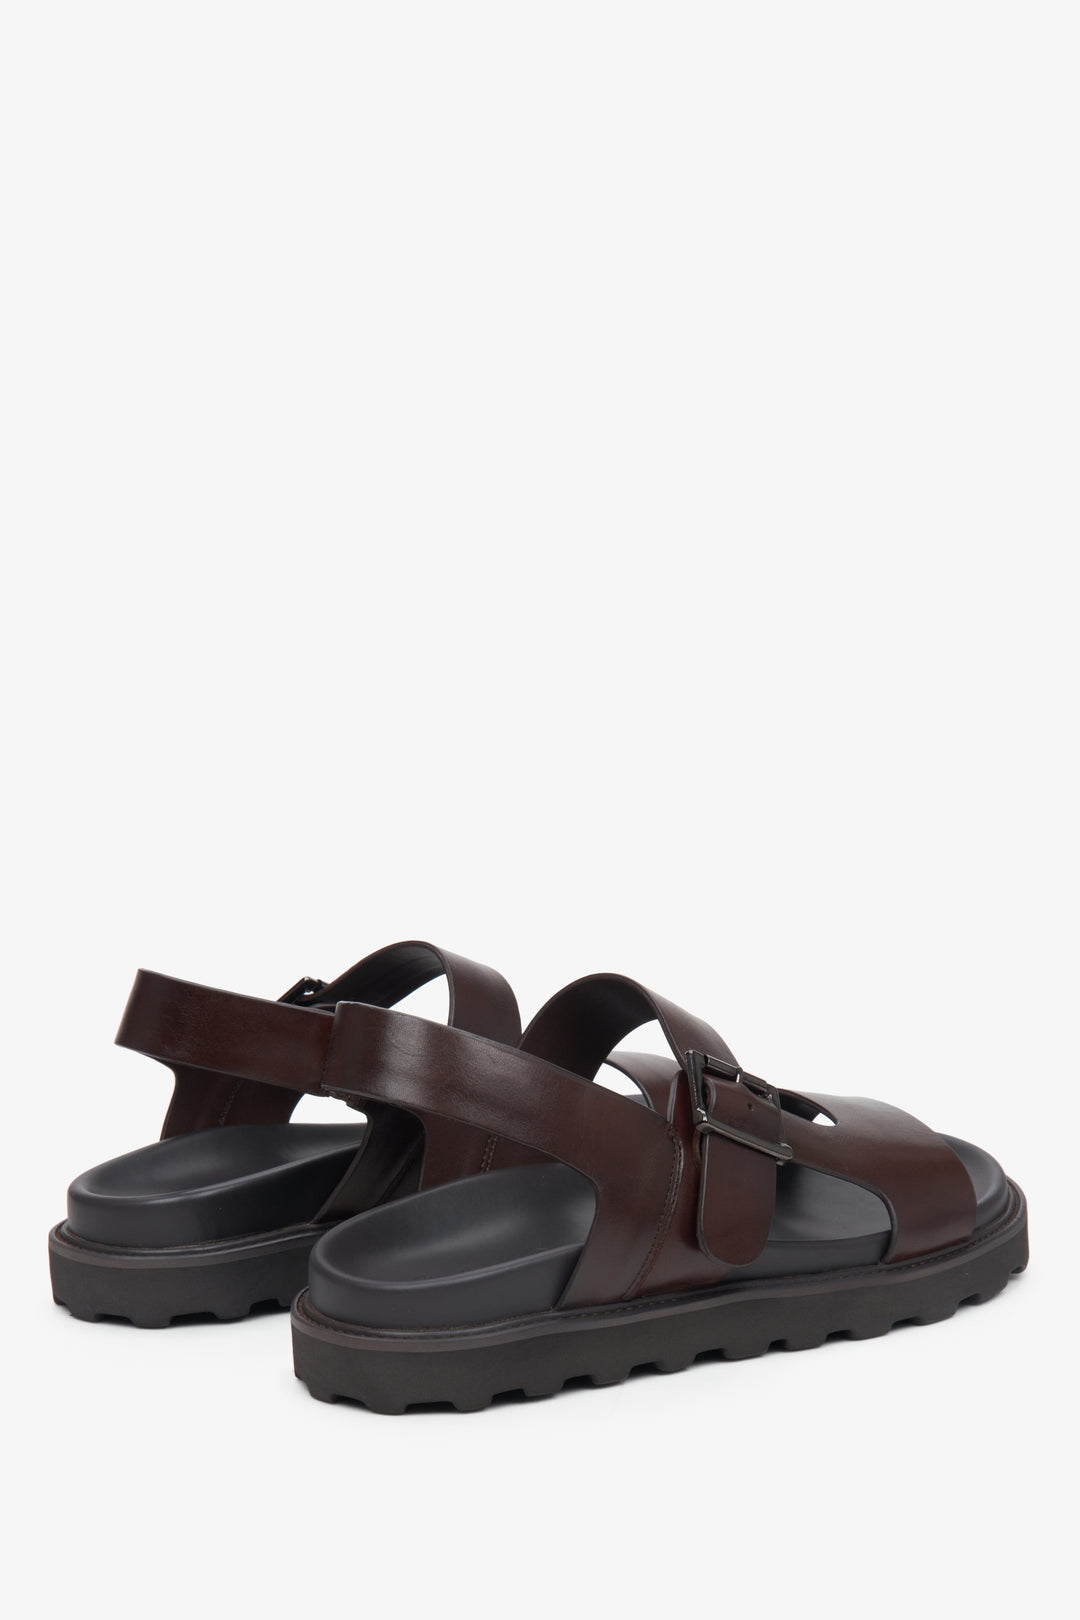 Men's saddle brown sandals made of genuine leather, Estro brand - a close-up on heel line.